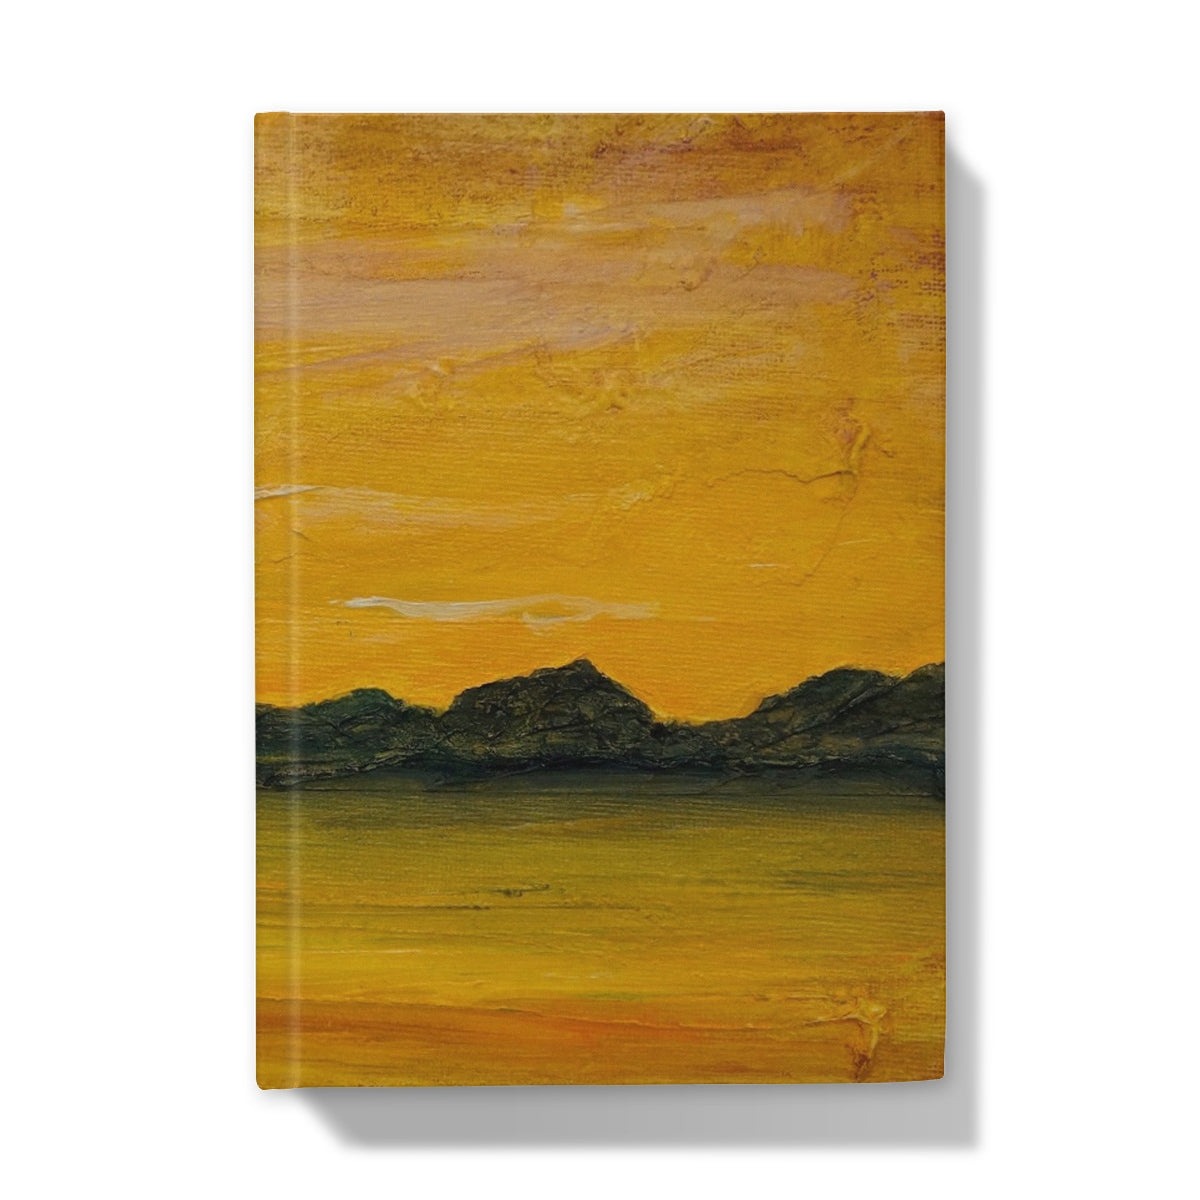 Jura Sunset Art Gifts Hardback Journal-Journals & Notebooks-Hebridean Islands Art Gallery-A5-Lined-Paintings, Prints, Homeware, Art Gifts From Scotland By Scottish Artist Kevin Hunter